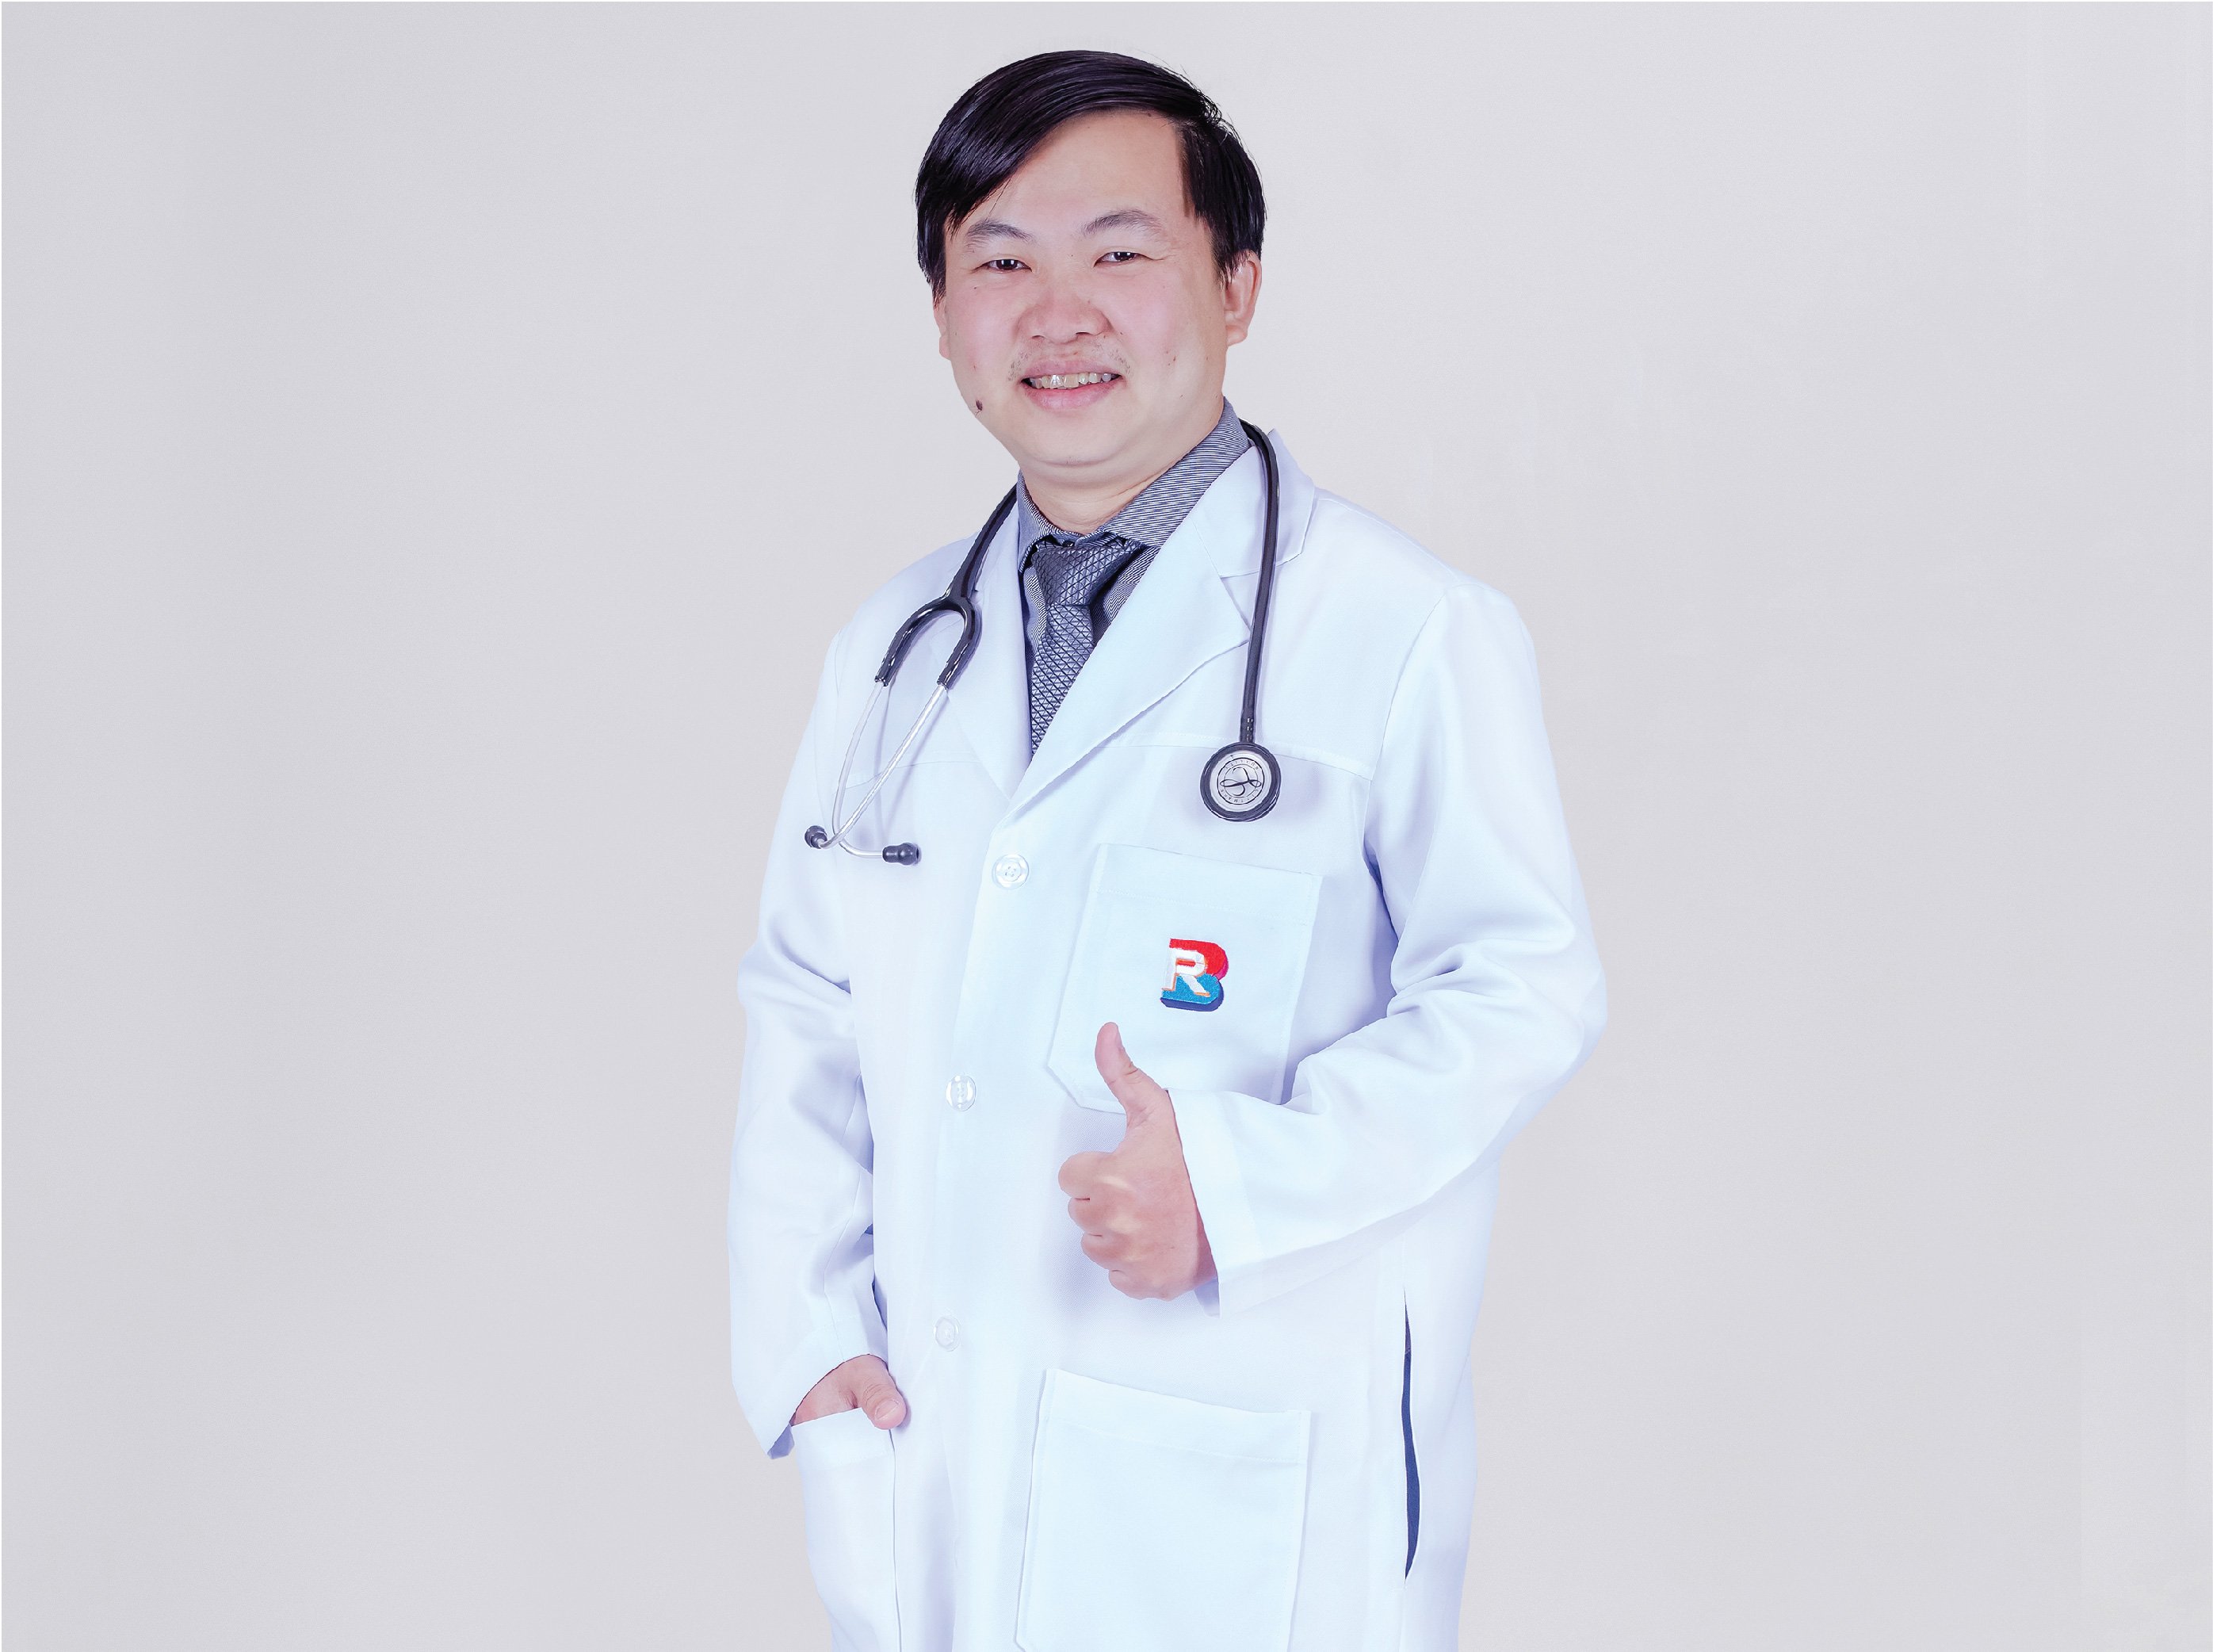 Dr. Heng Ratmony